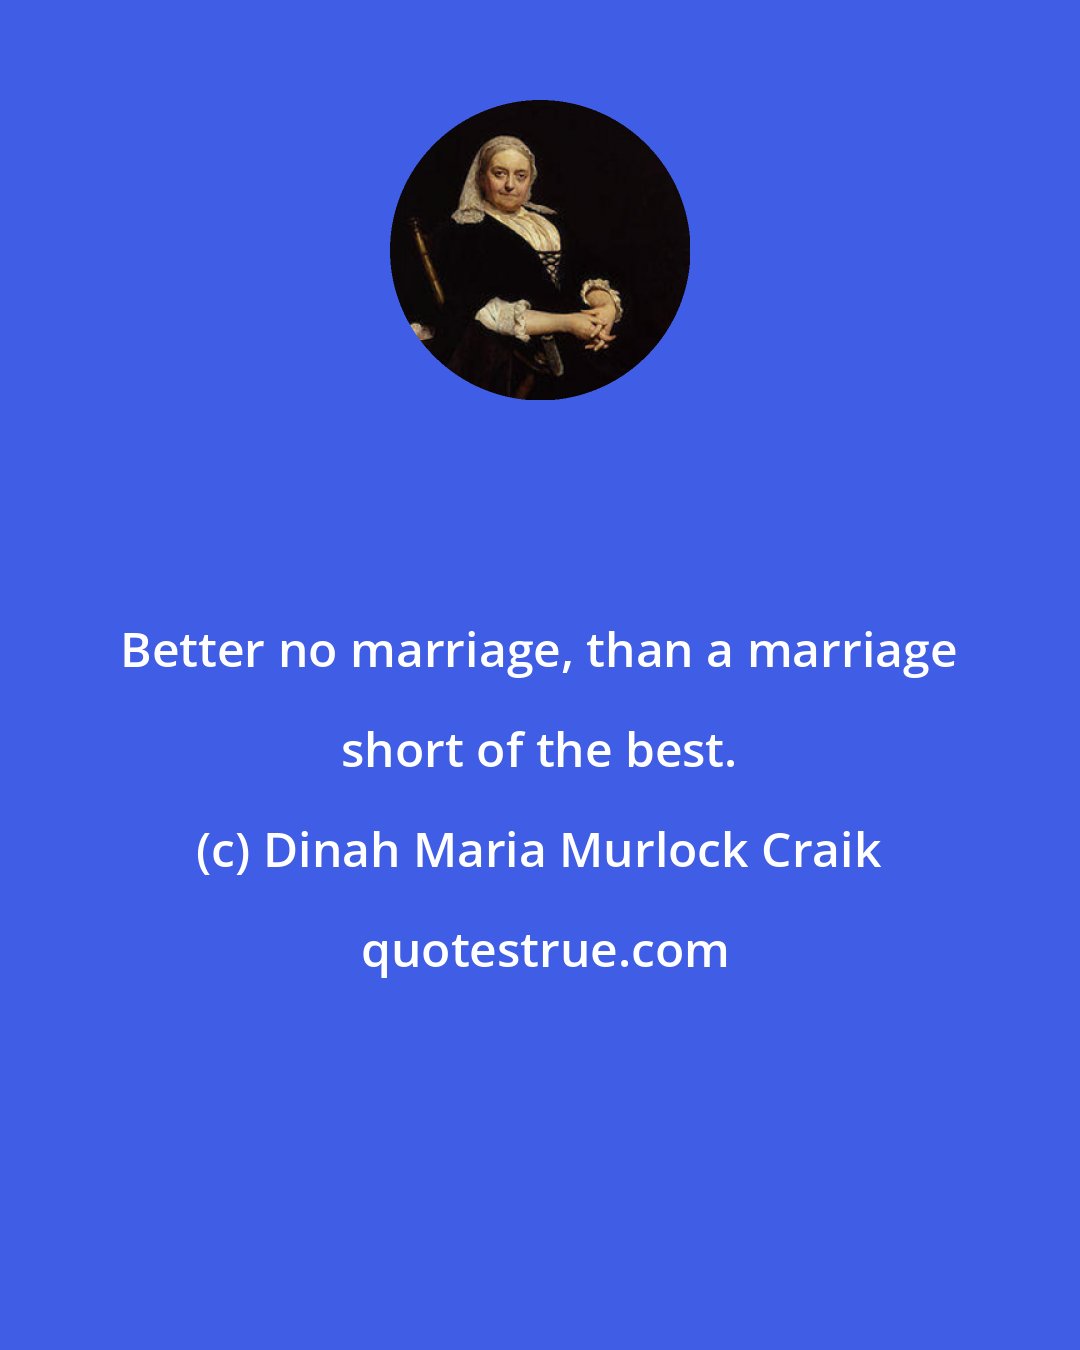 Dinah Maria Murlock Craik: Better no marriage, than a marriage short of the best.